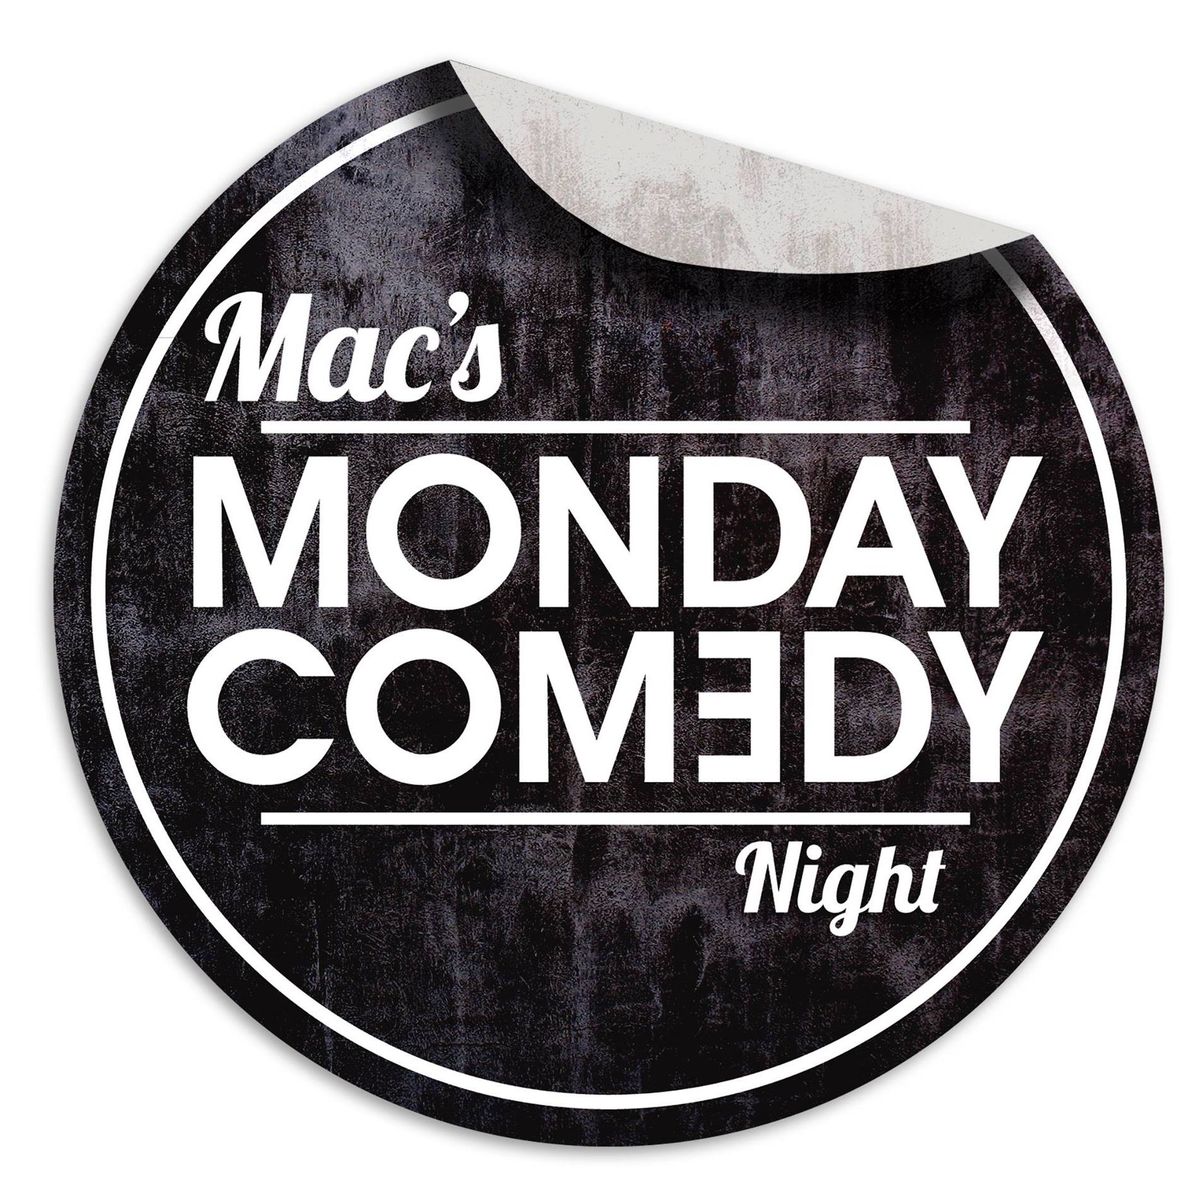 Mac's Monday Comedy Night